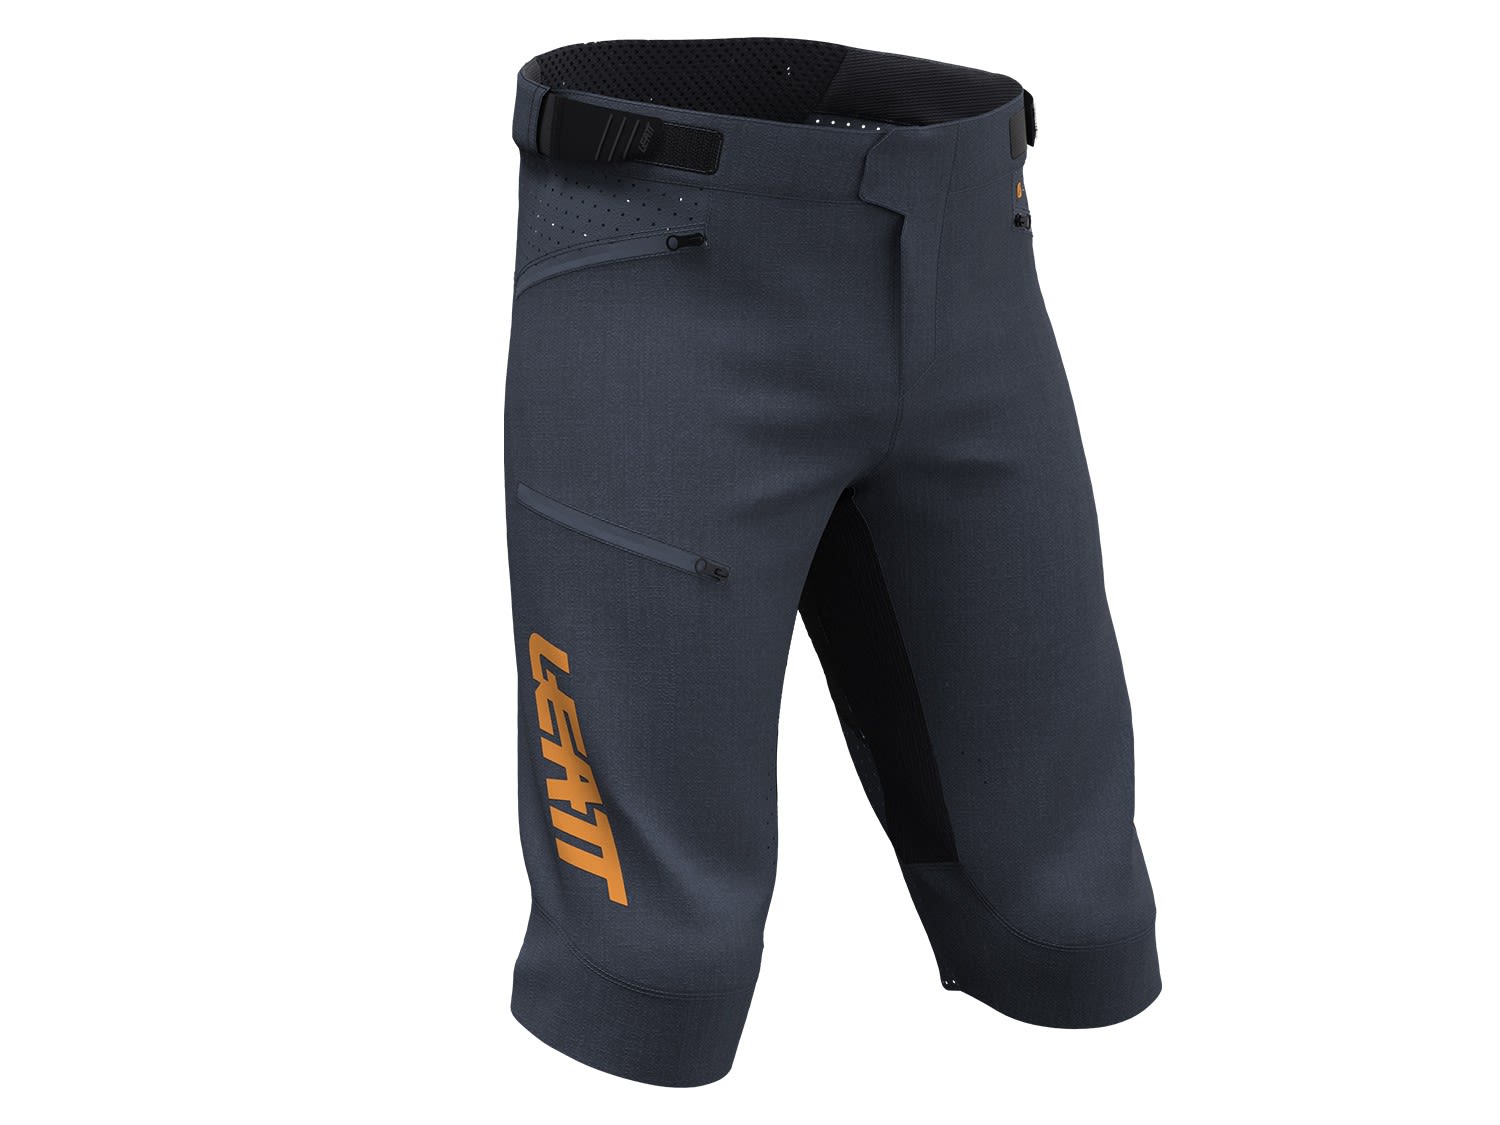 Leatt MTB Enduro 3-0 Shorts Grau- Male Shorts- Grsse S - Farbe Rust unter Leatt